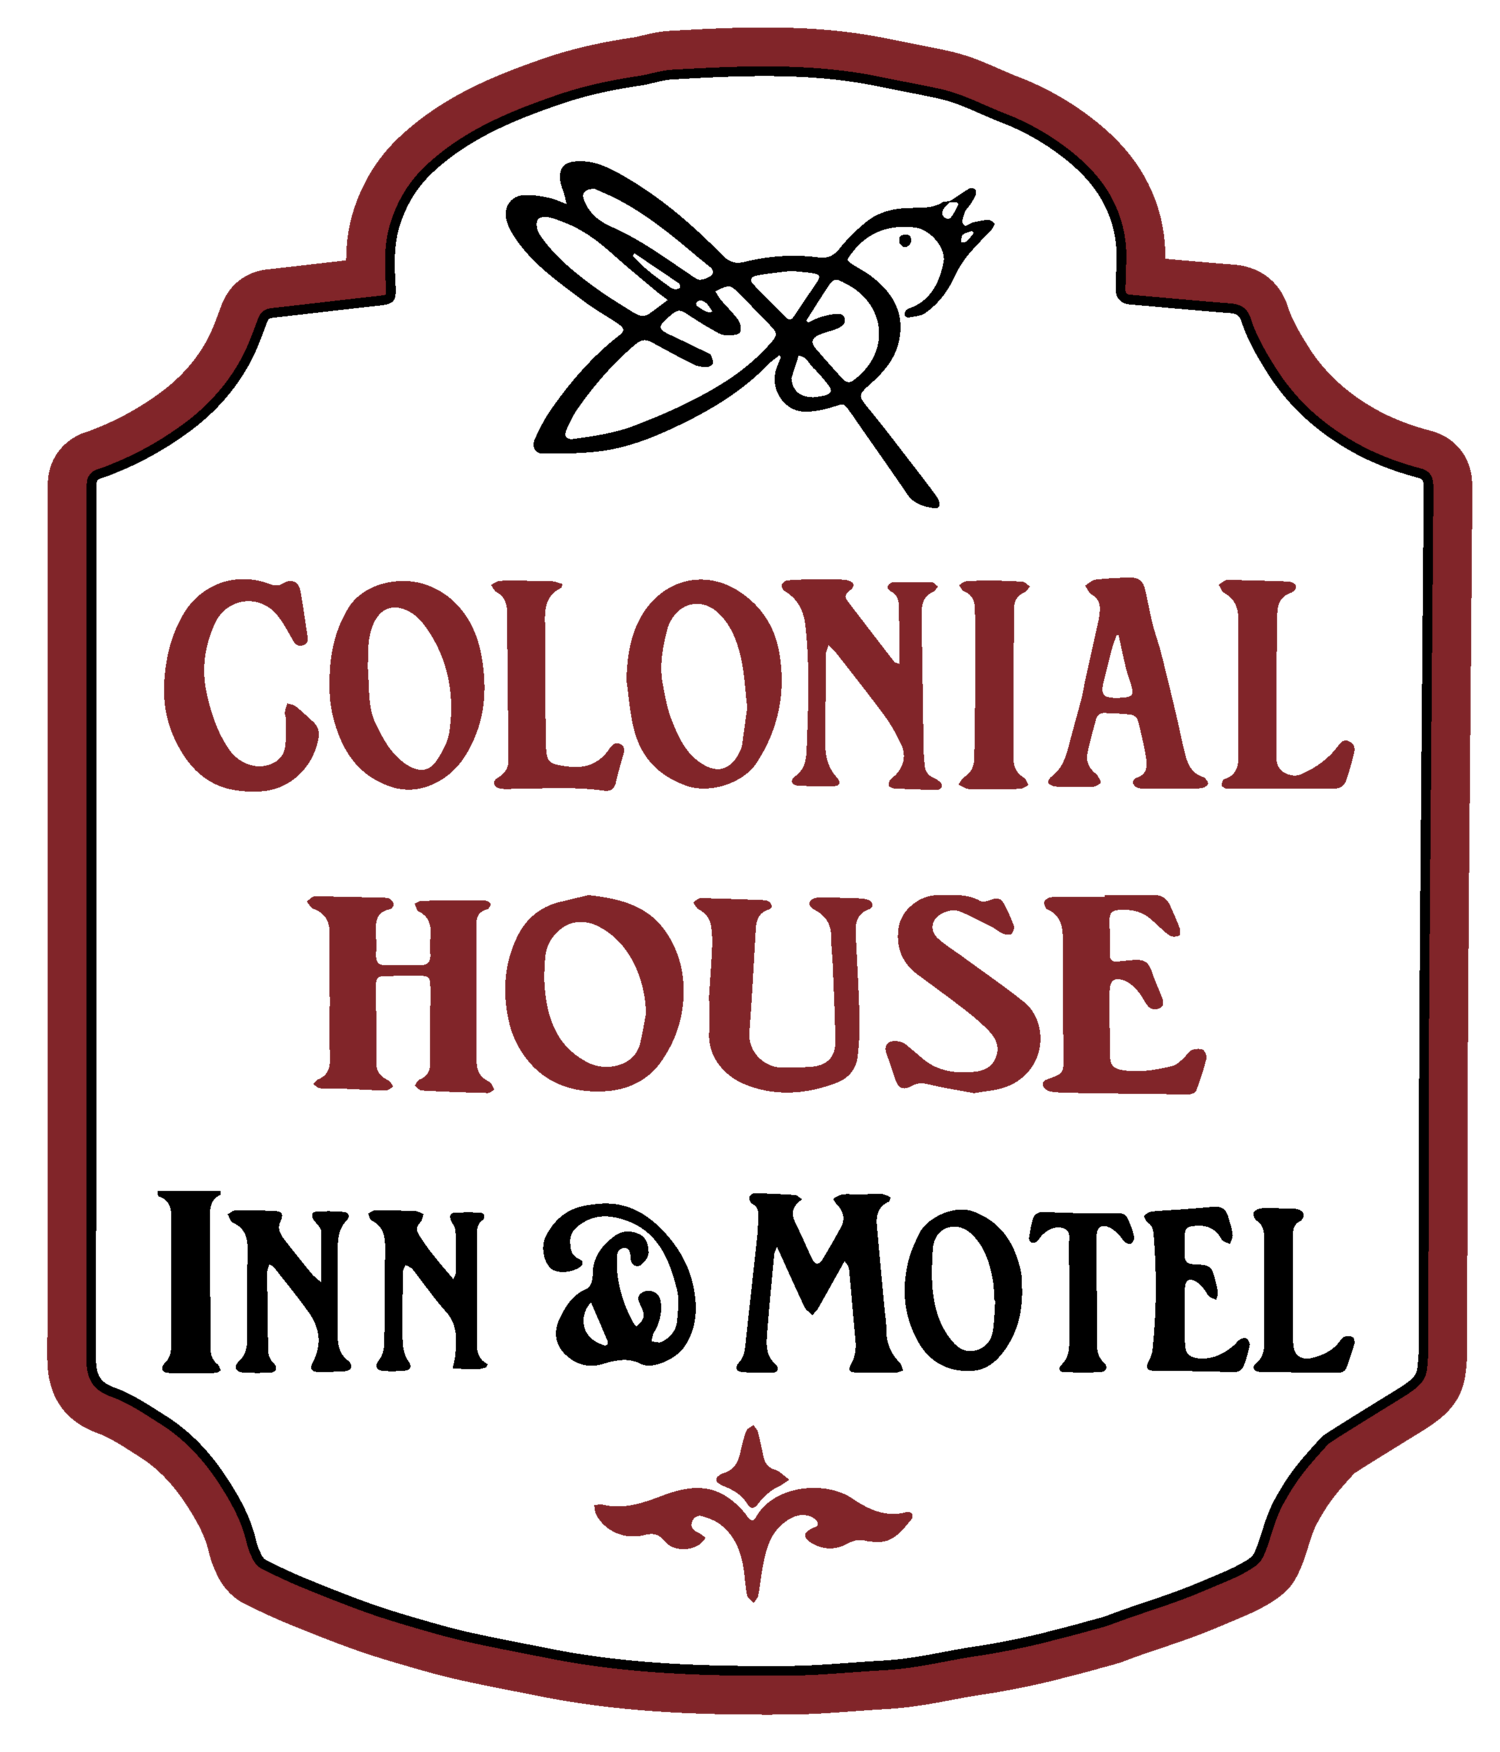 Colonial House Inn & Motel